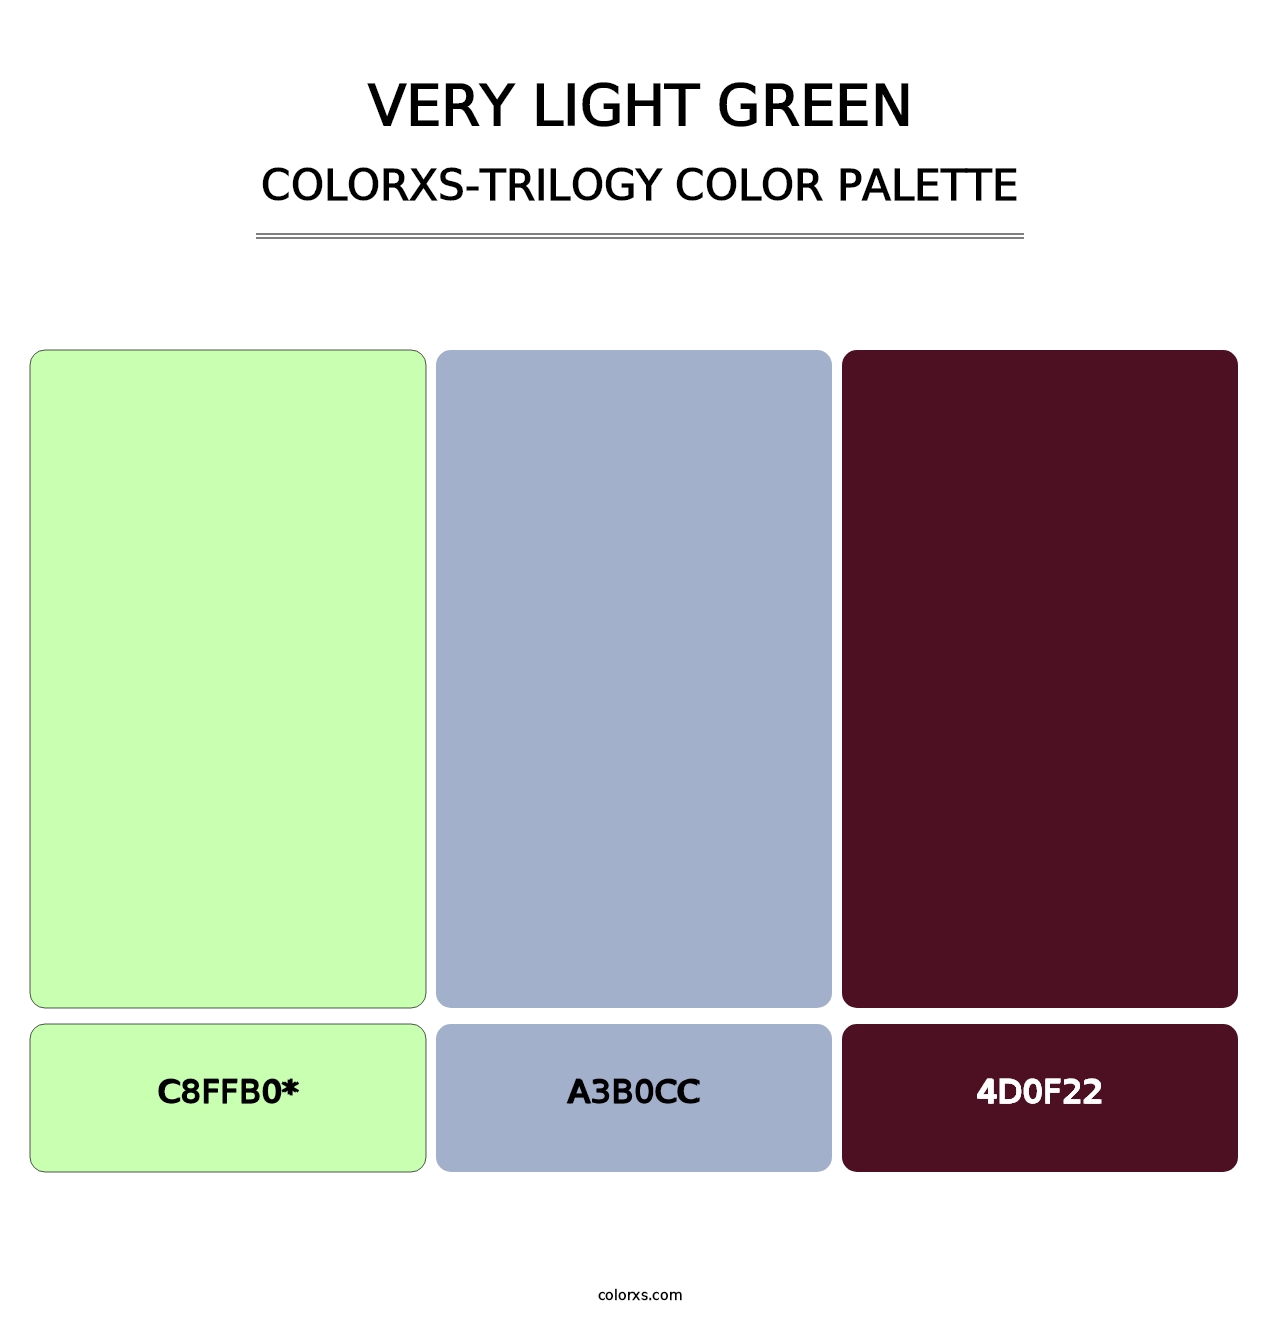 Very Light Green - Colorxs Trilogy Palette